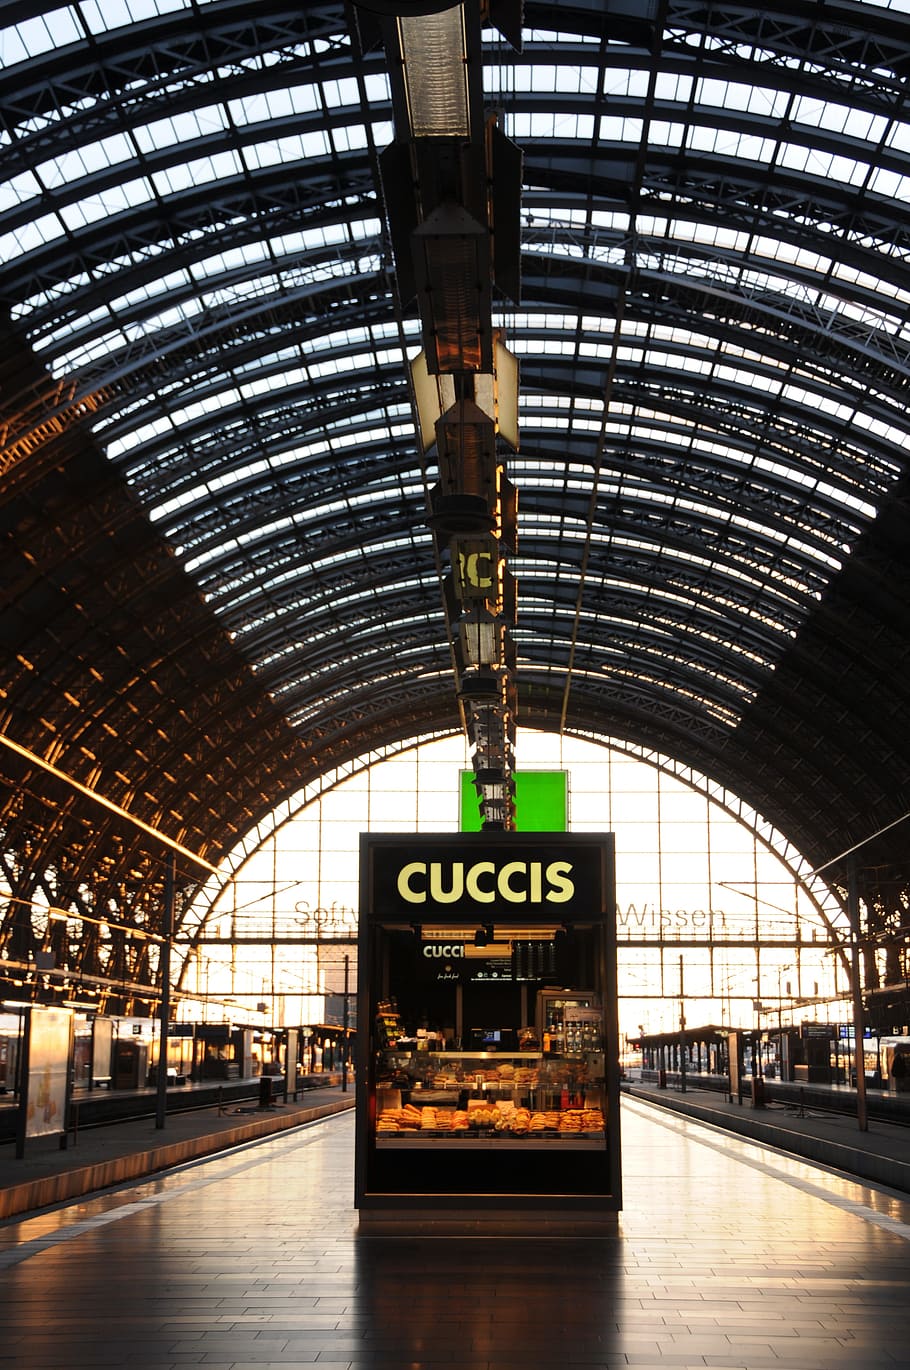 Concourse, Kiosk, Frankfurt, railway station, deutsche bahn, train, architecture, transportation, indoors, illuminated